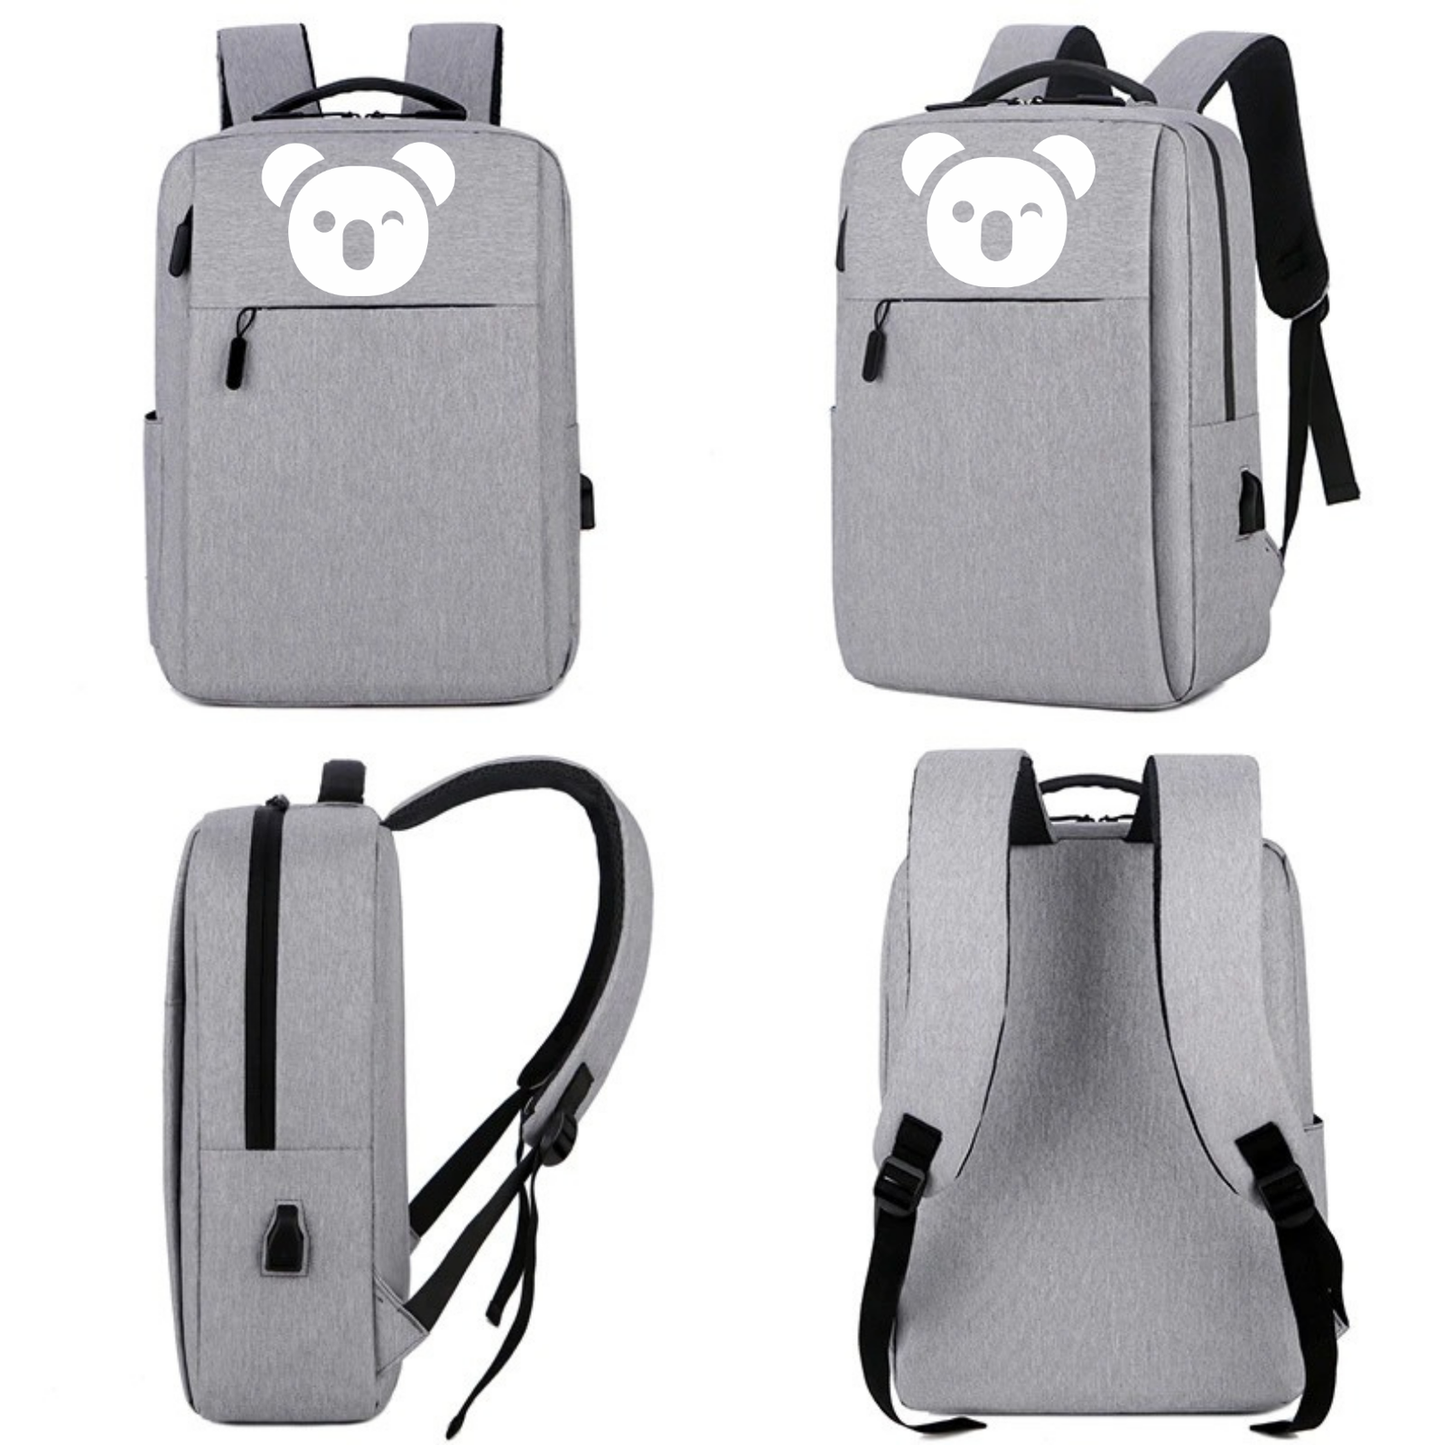 Tech Backpack - Computer Bag